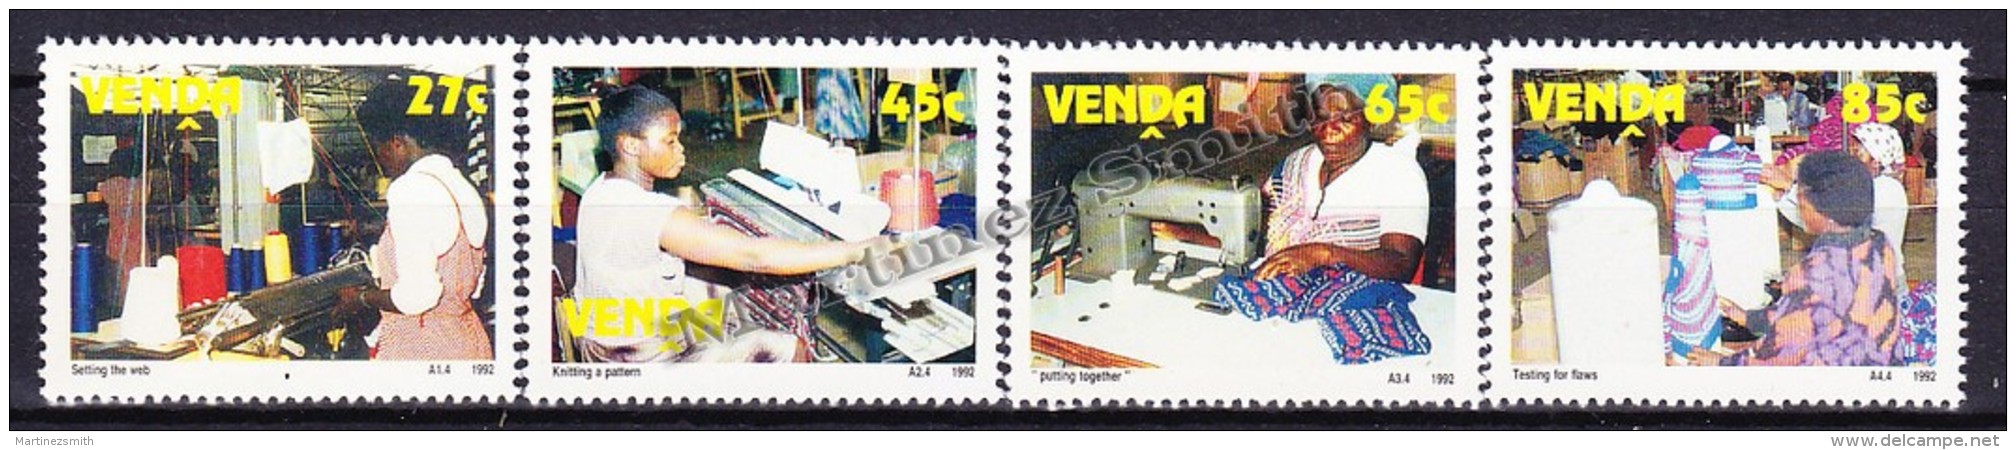 South Africa - Afrique Du Sud - Venda 1992 Yvert  233 - 36, Industrial Production - MNH - Nuevos